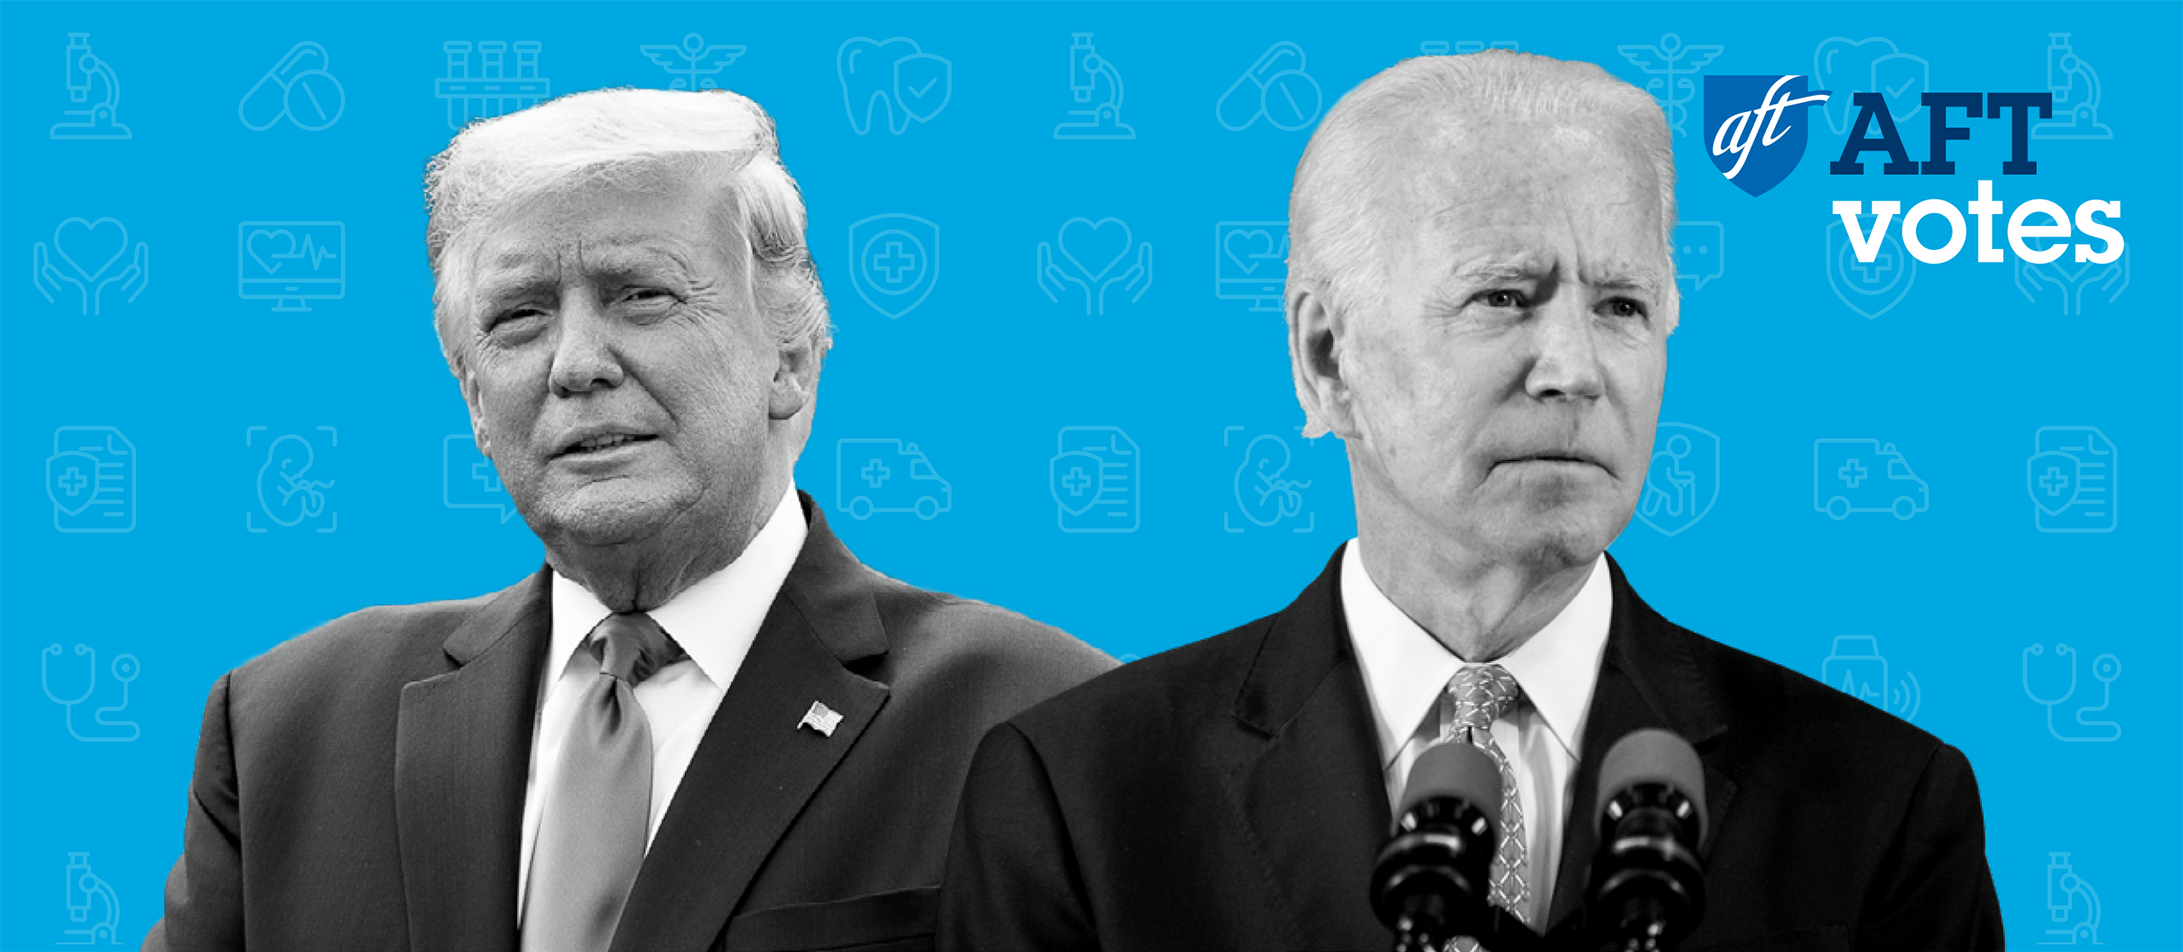 Trump vs Biden on the Issues